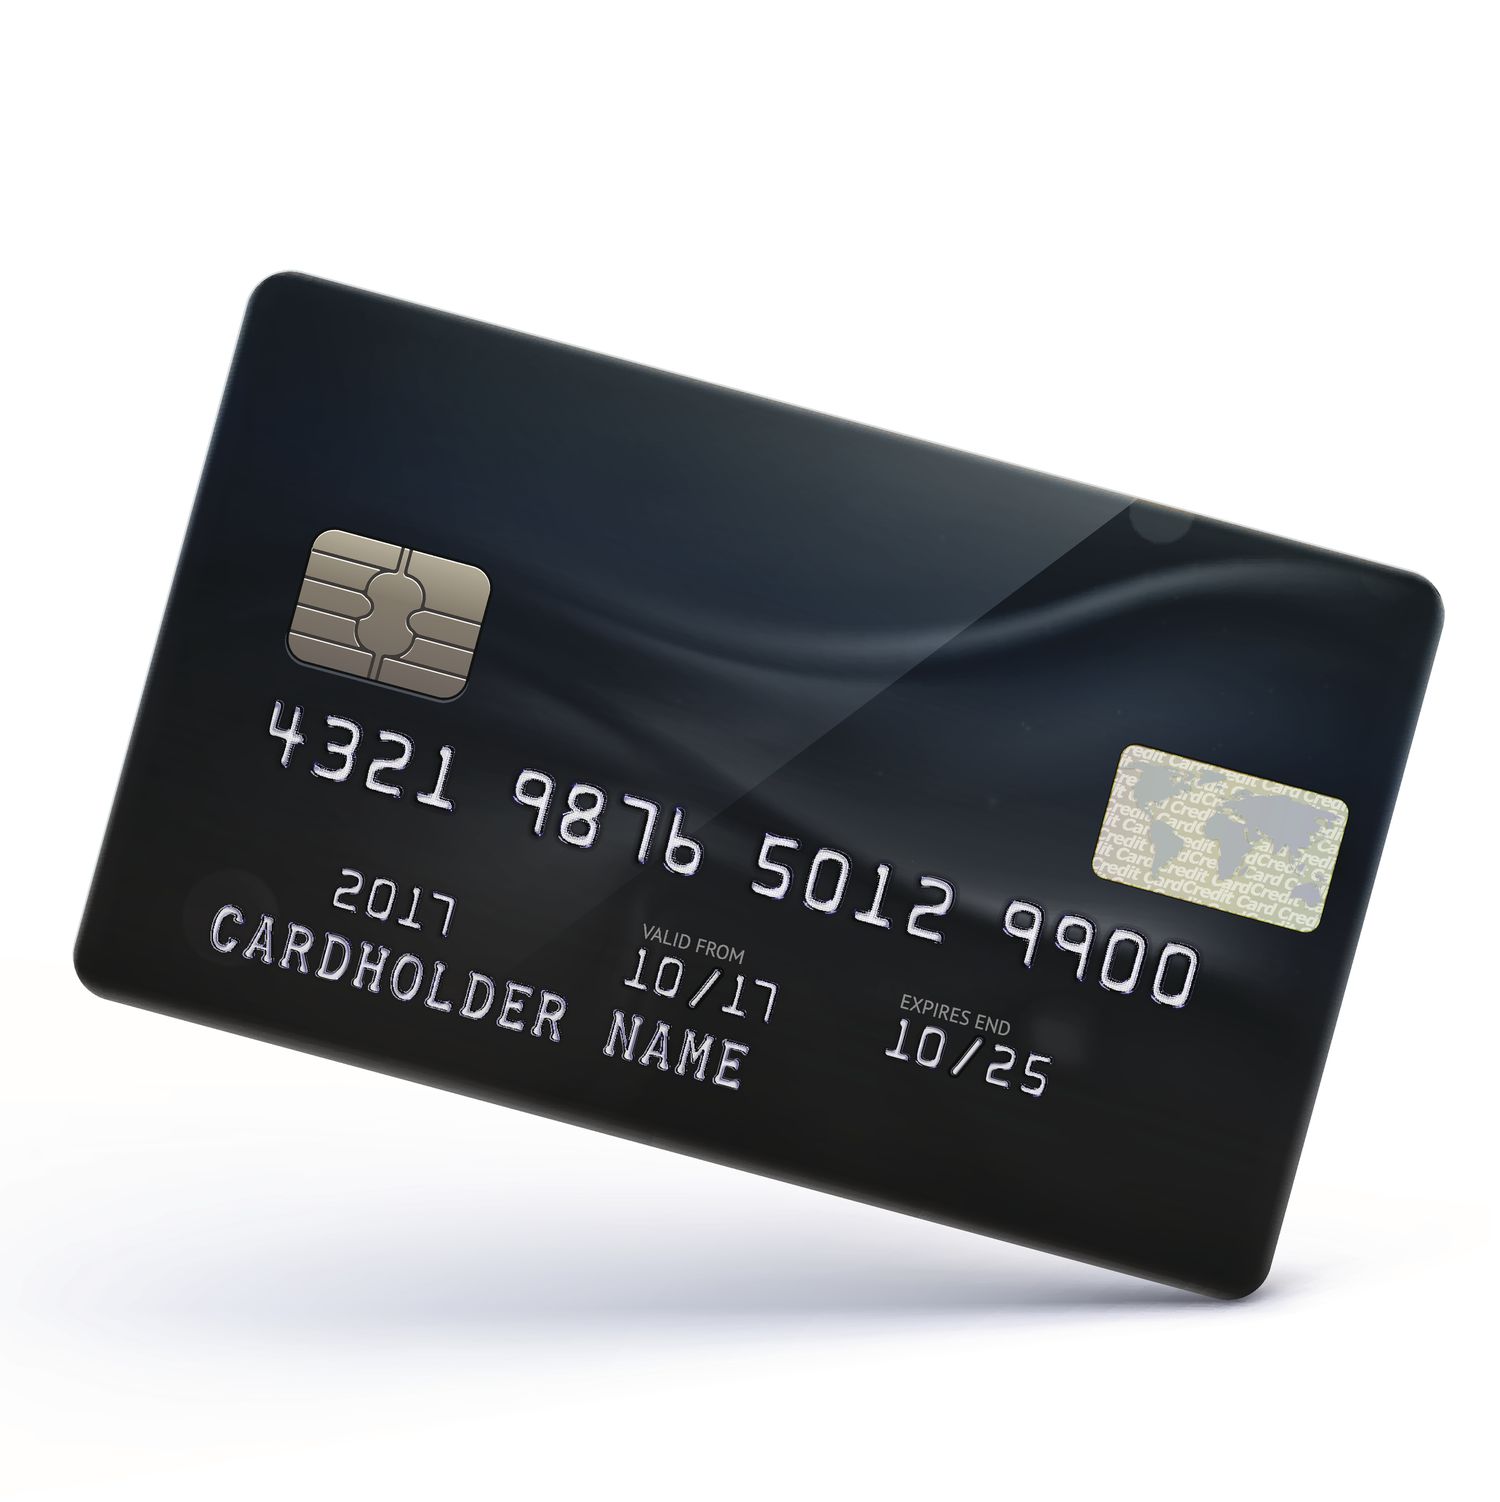 How Do Prepaid Debit Cards Work?